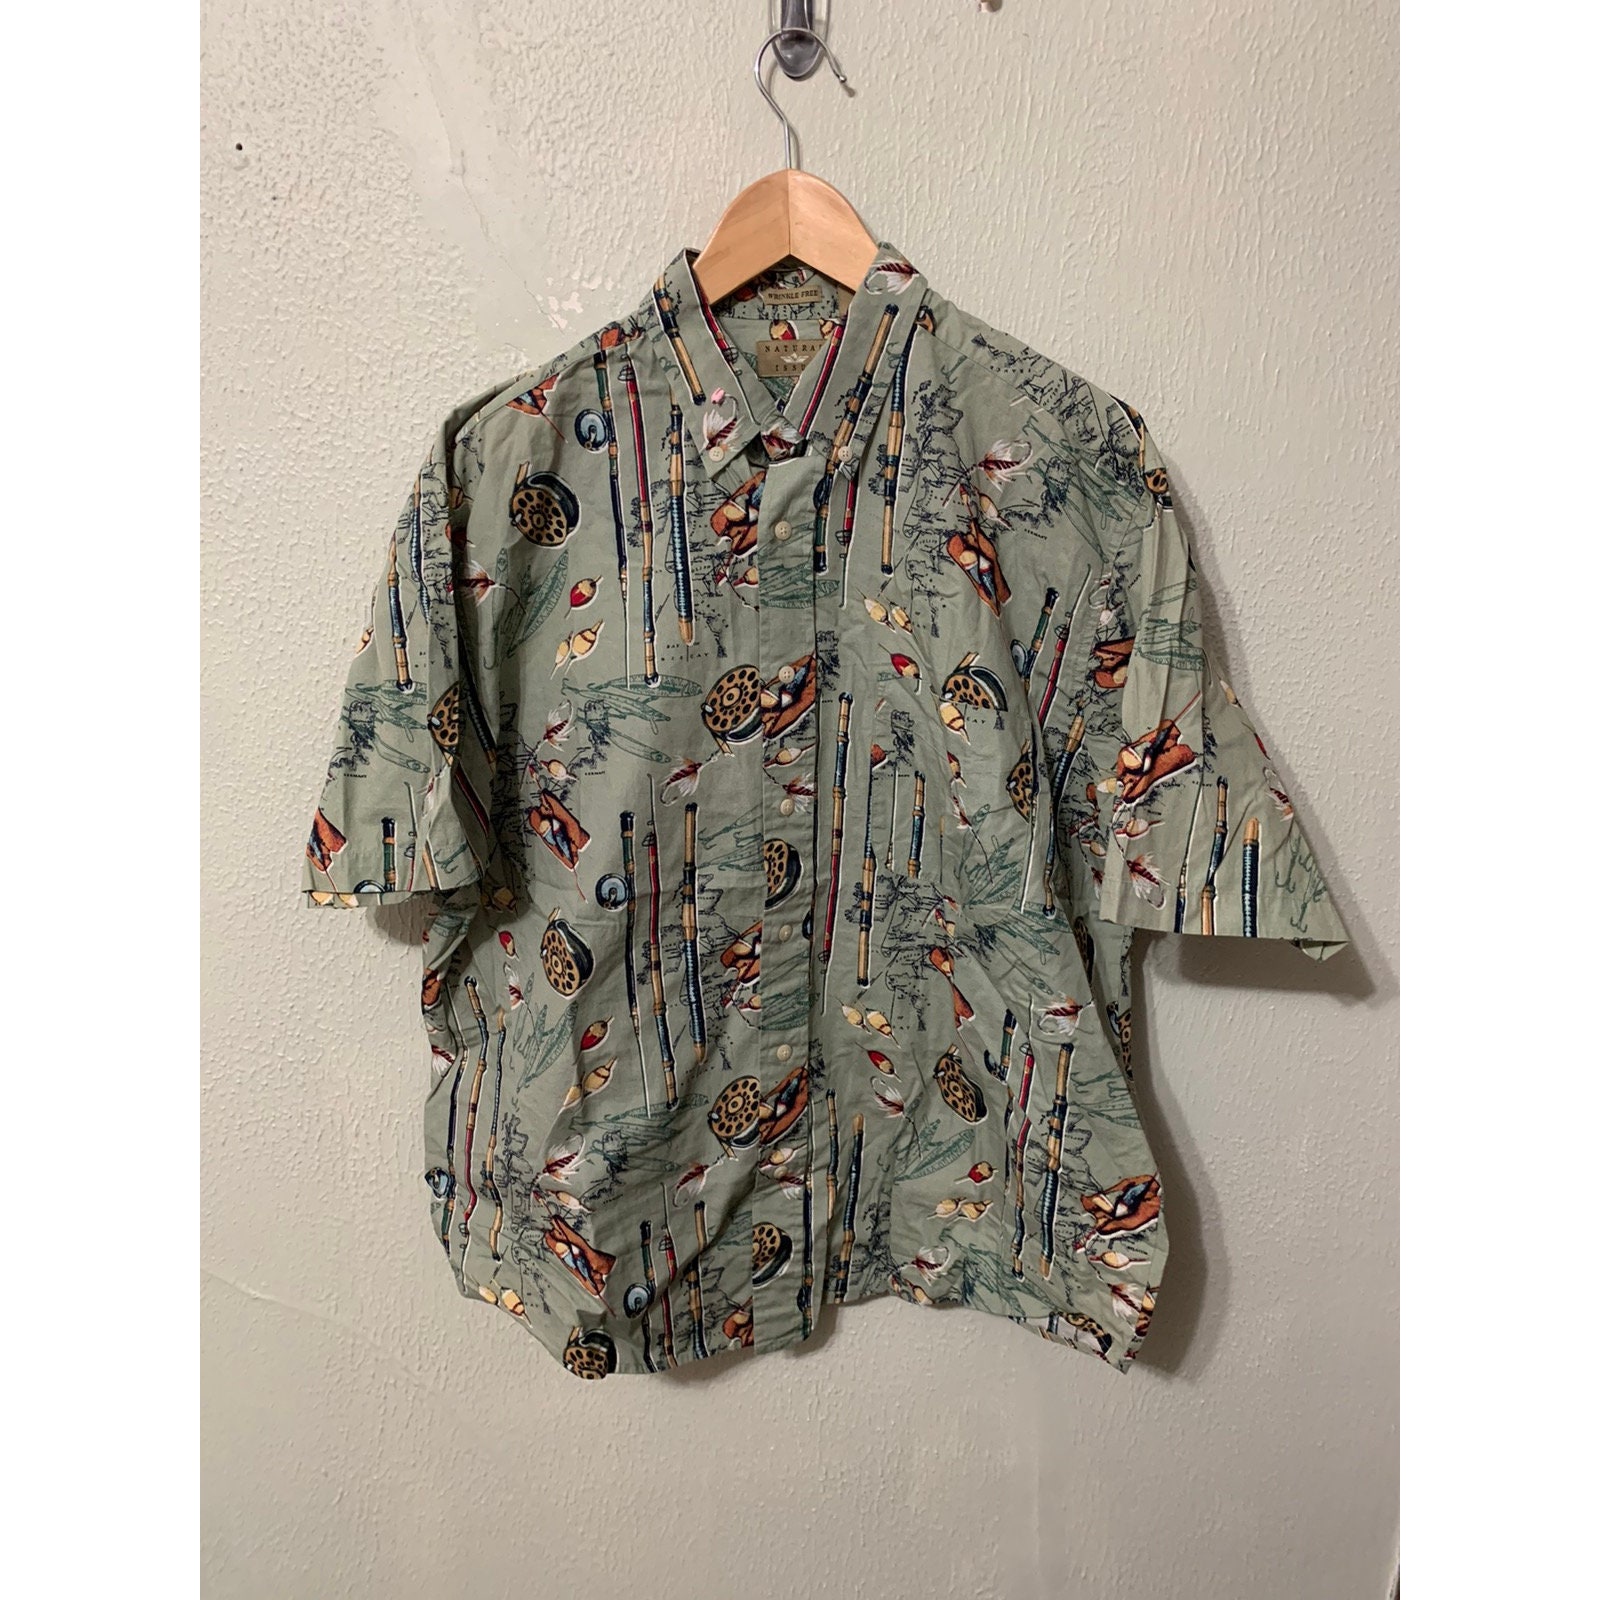 Vintage Fishing Tackle Button Up Fishing Shirt